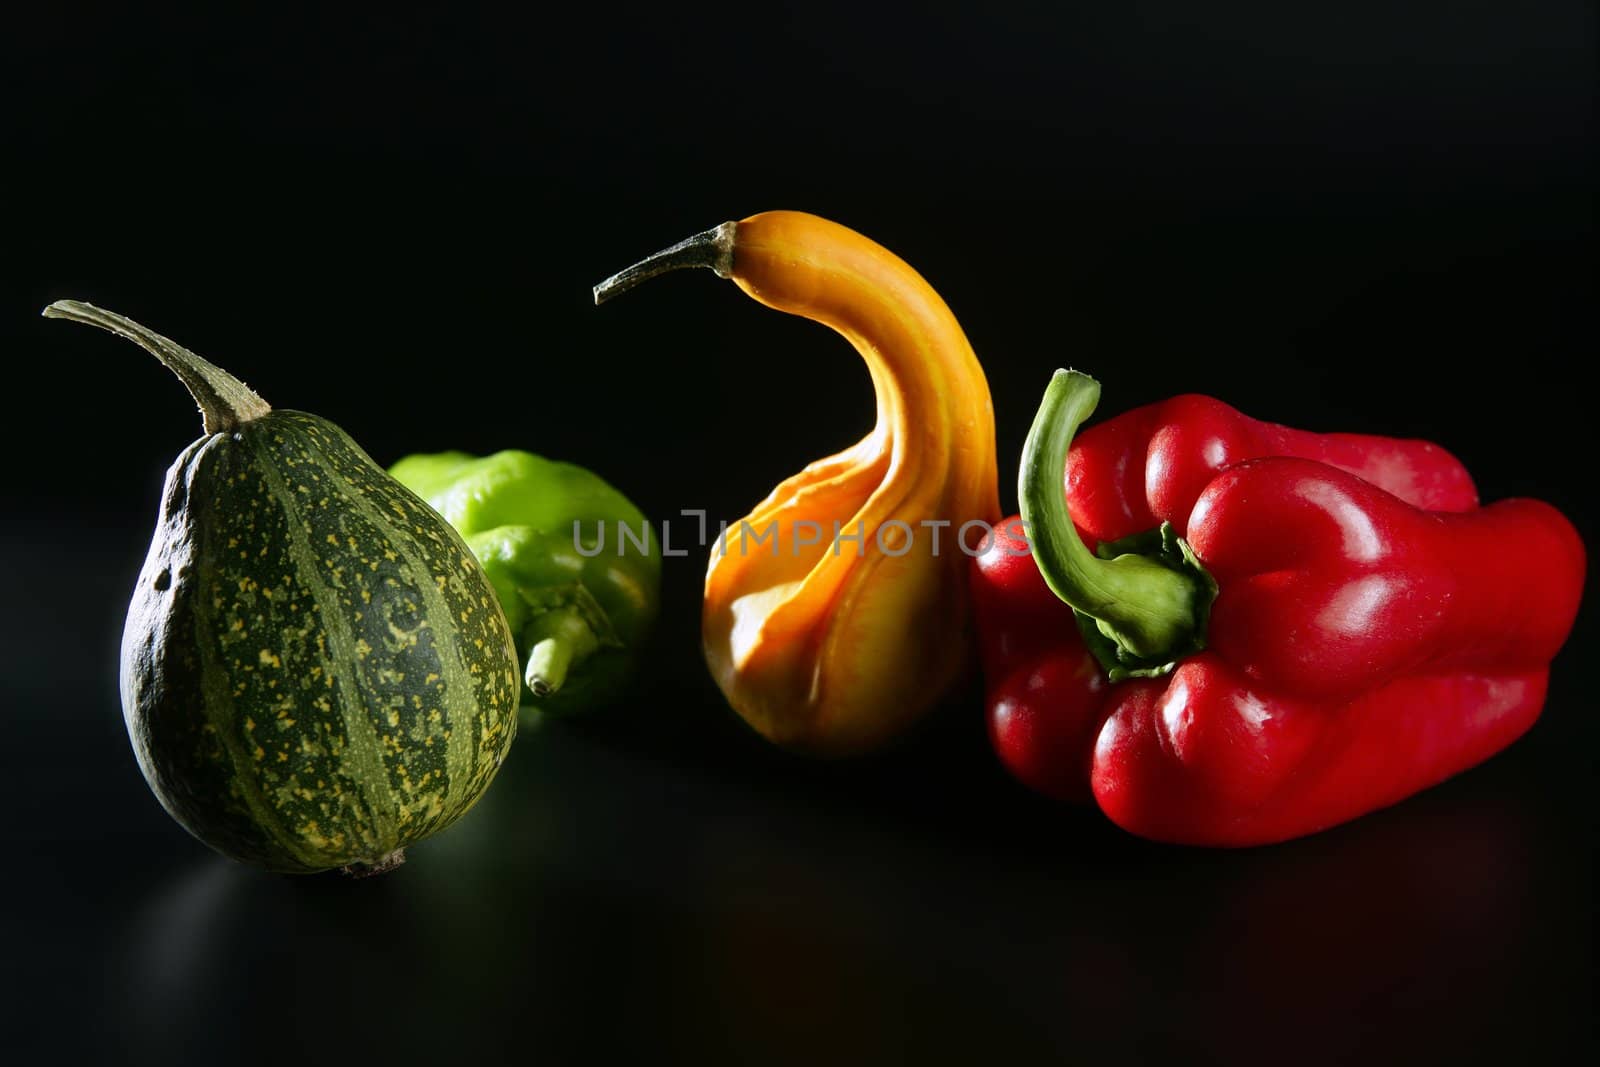 Colorful vegetables still over black by lunamarina